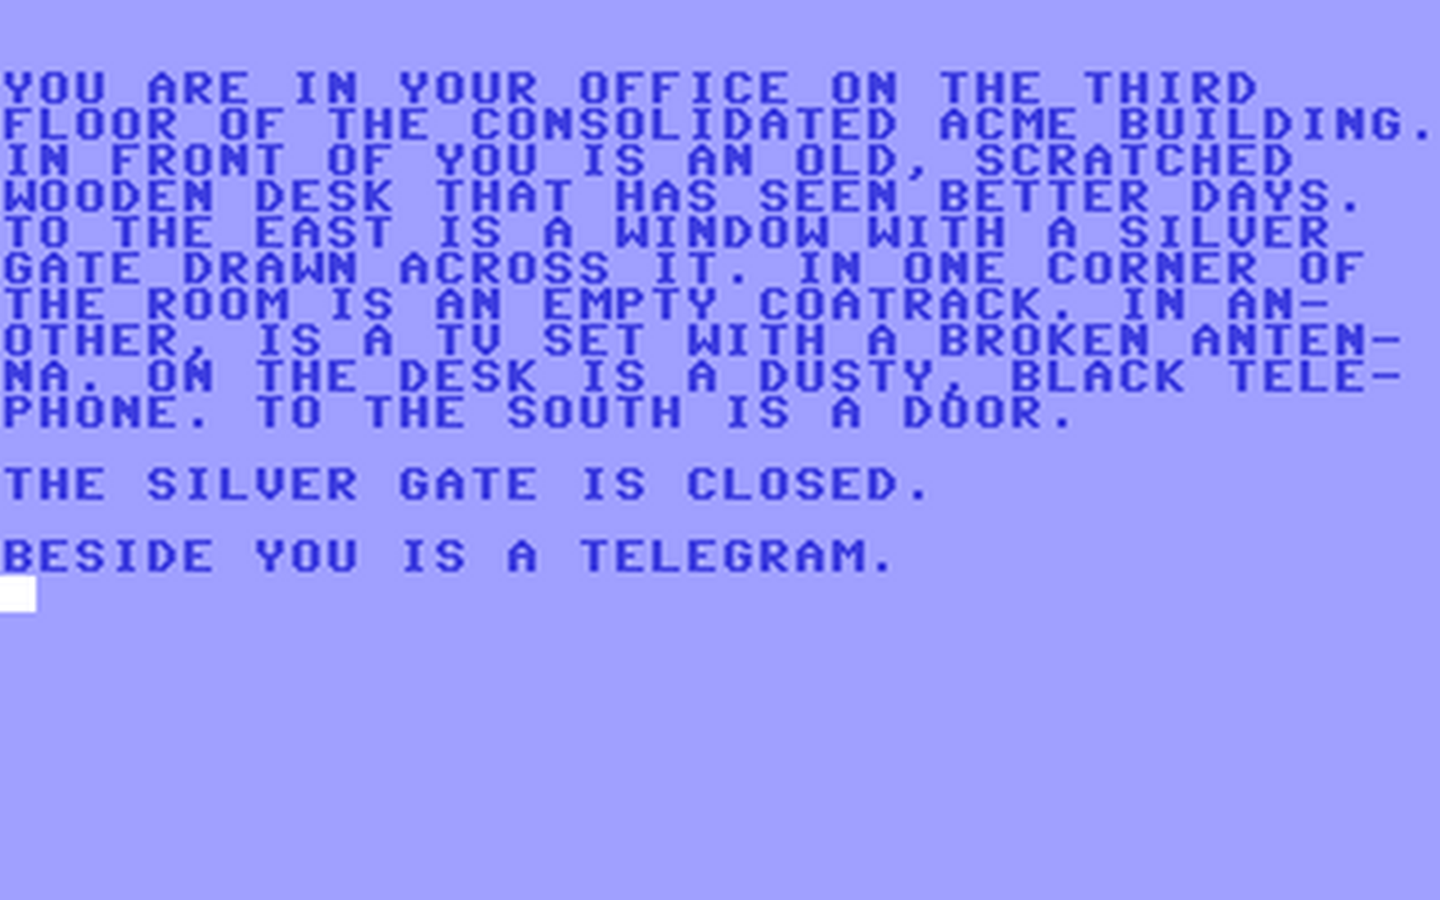 C64 GameBase Crime_Stopper Hayden_Book_Company,_Inc. 1984